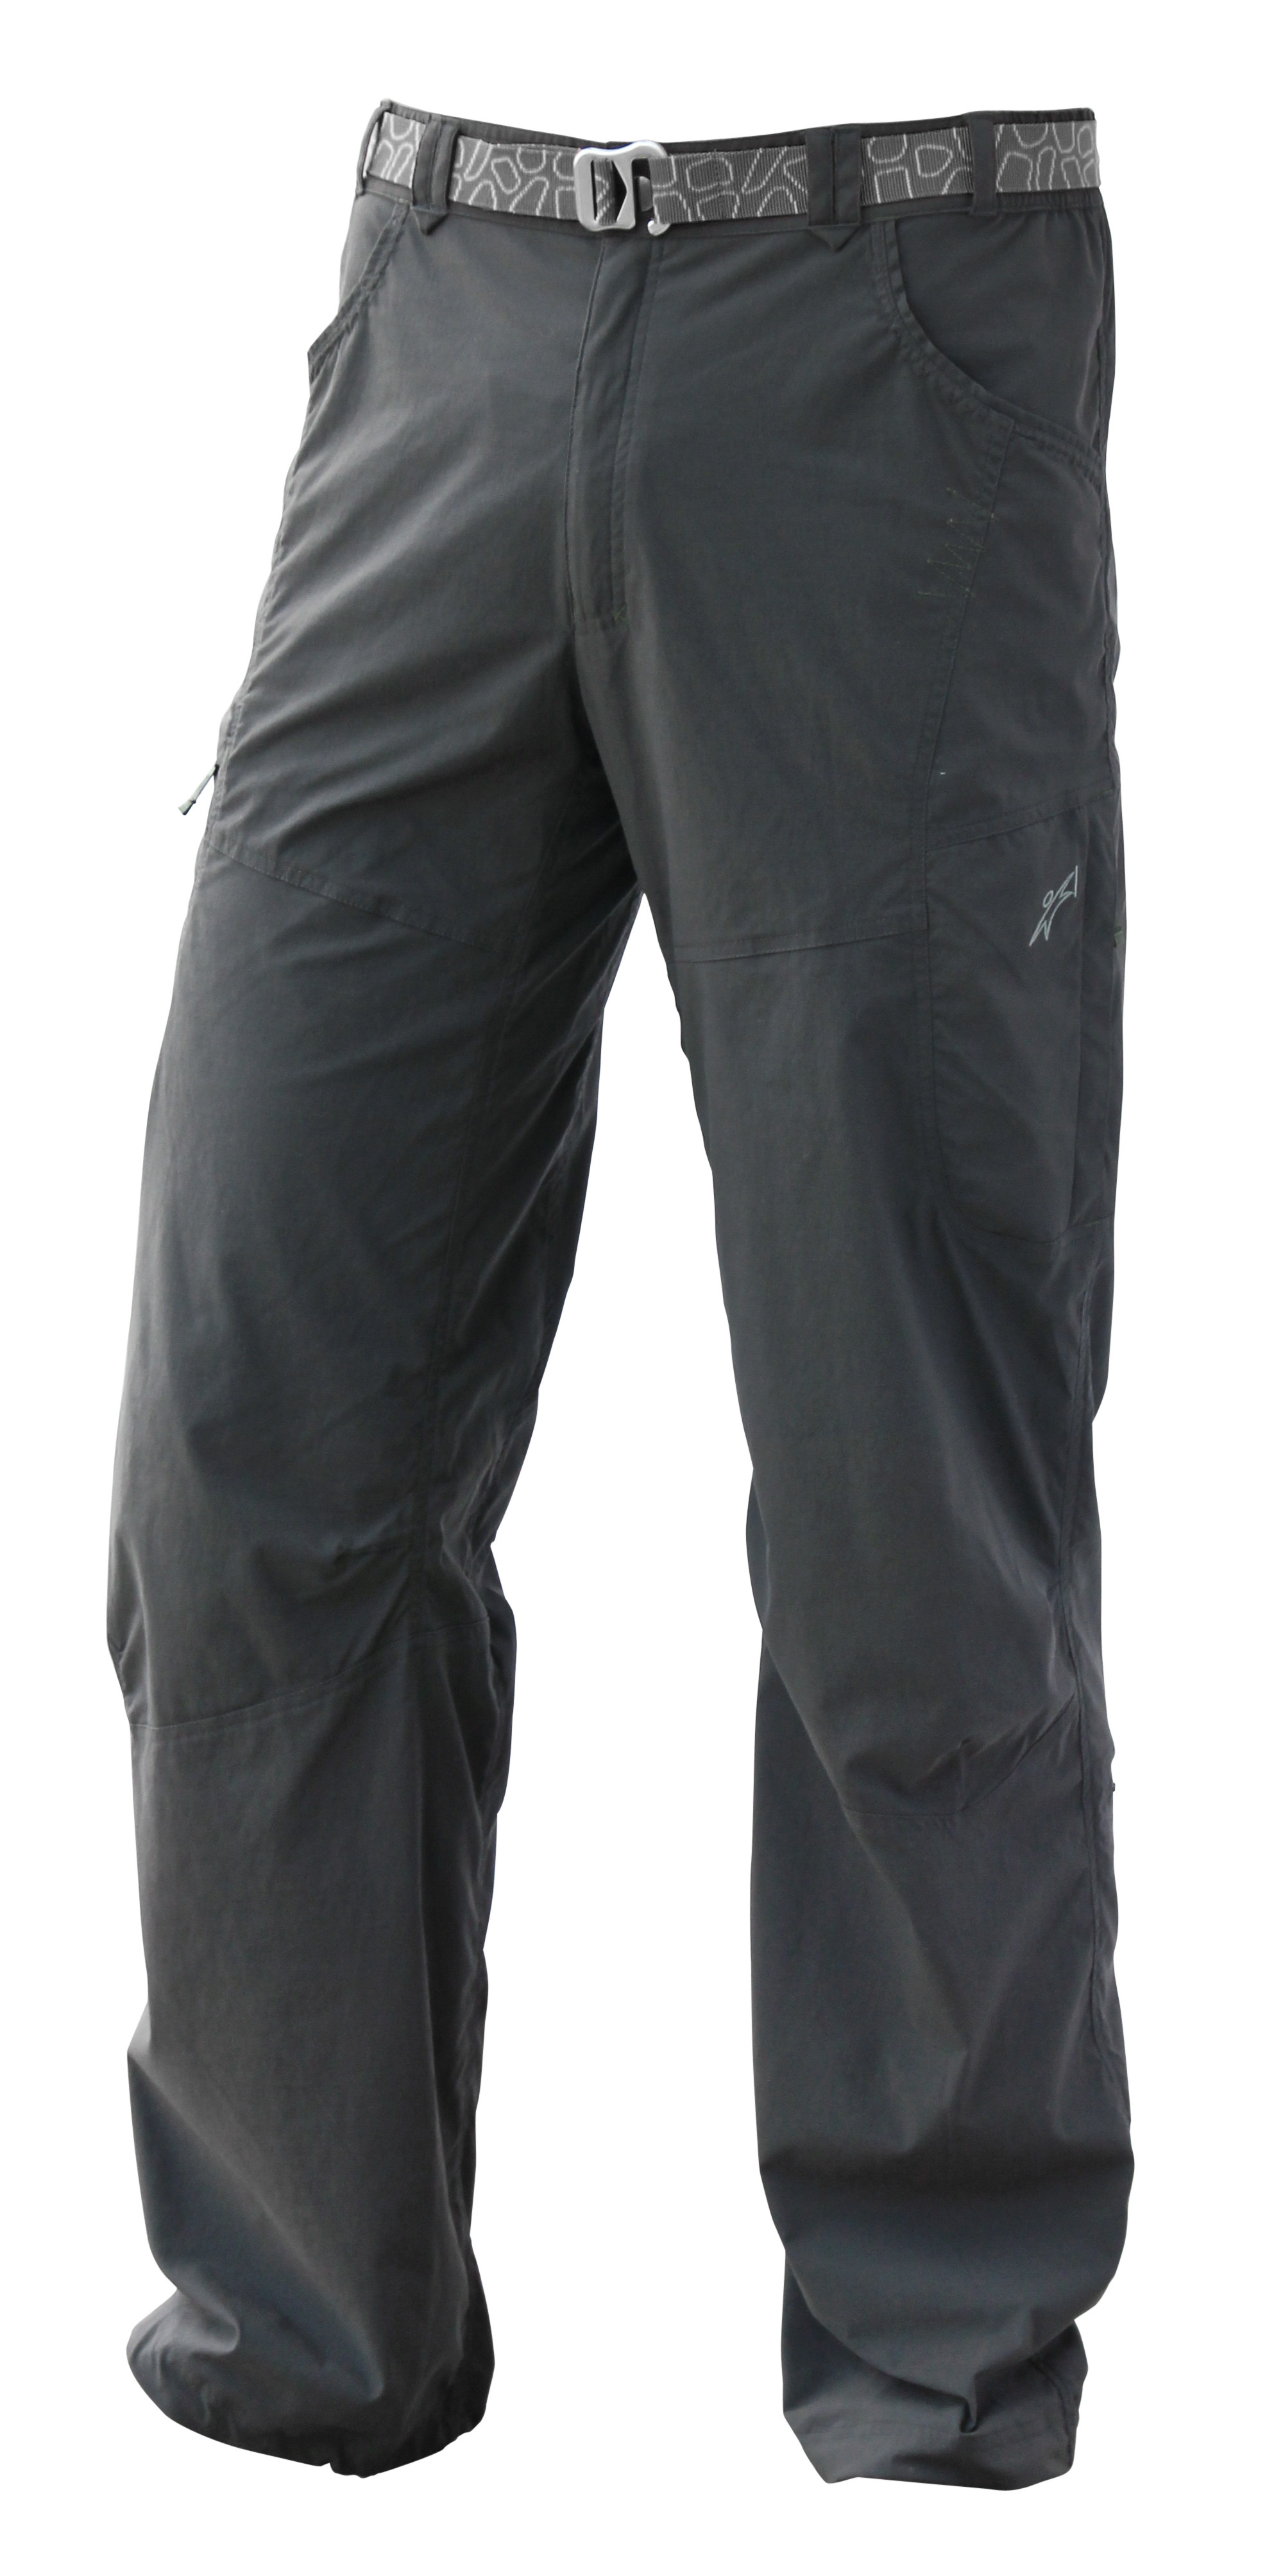 Warmpeace kalhoty Corsar Barva: Iron, Velikost nebo typ: XXL